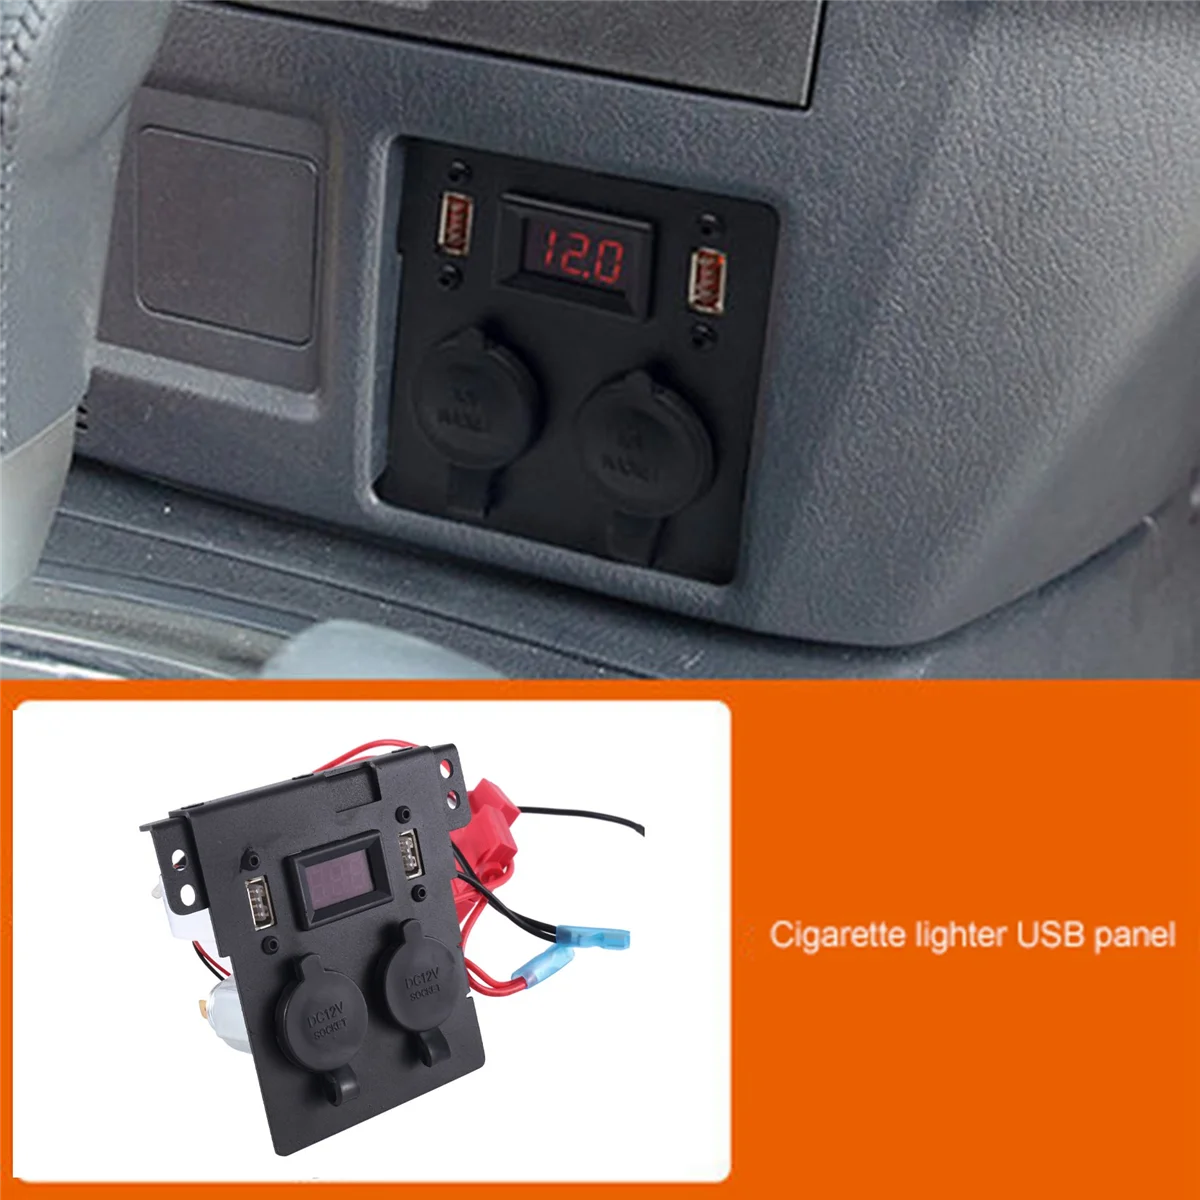 

Car Cigarette Lighter QC3.0 Fast Charging Panel for Mitsubishi Pajero V97 V93 V87 Pajero USB Cigarette Lighter